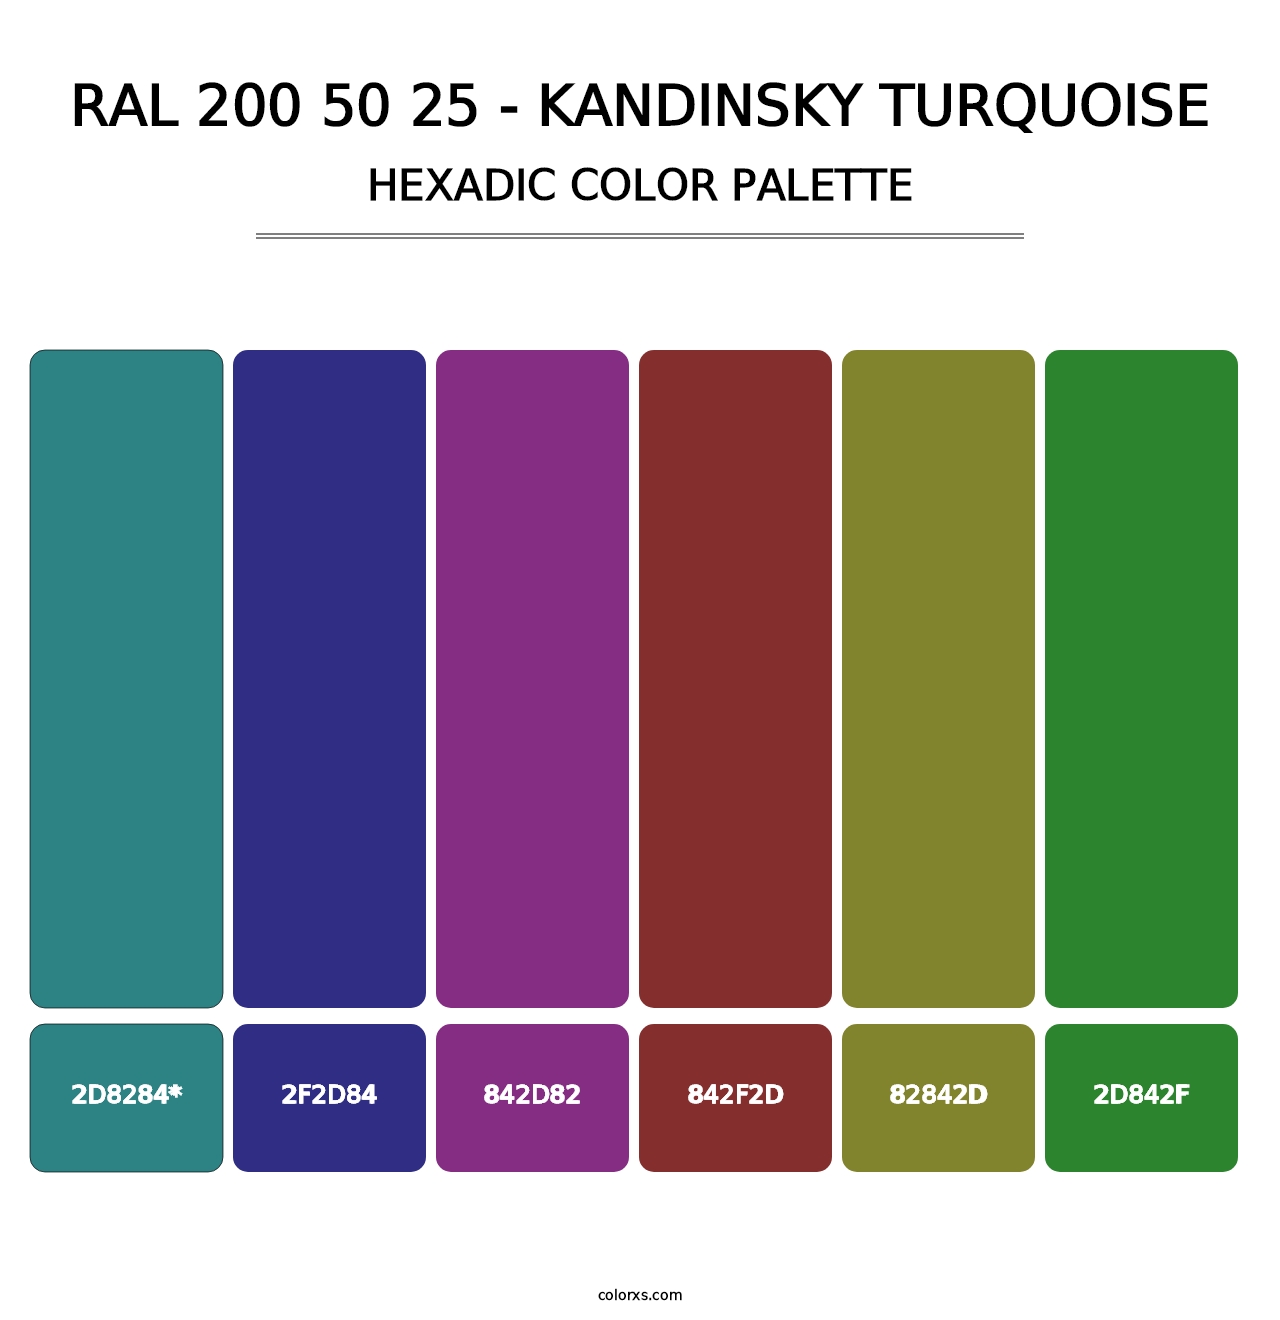 RAL 200 50 25 - Kandinsky Turquoise - Hexadic Color Palette